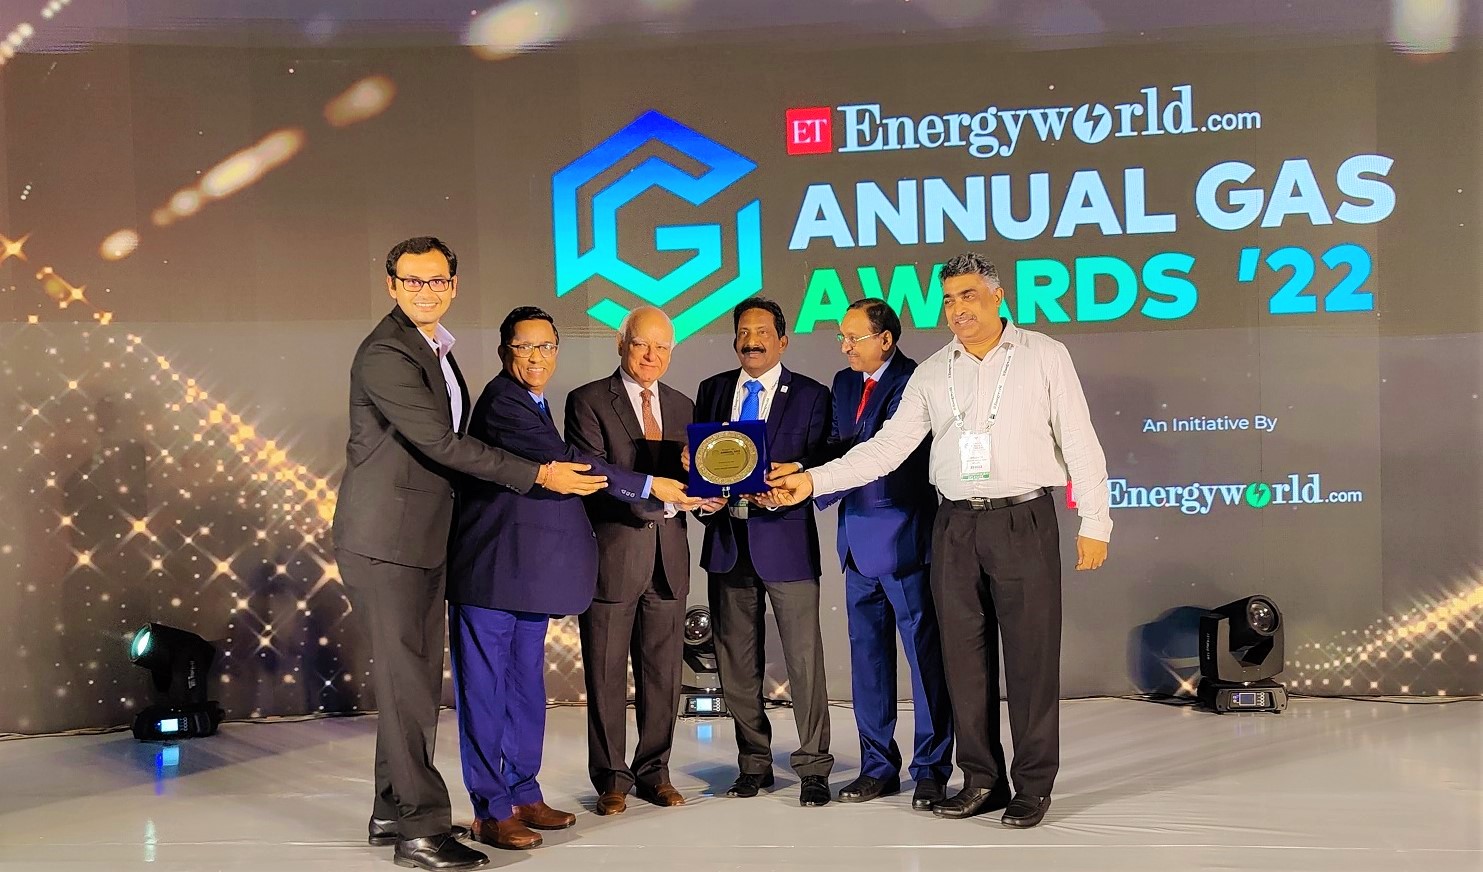 ET Energy World “Product of the Year Award” 